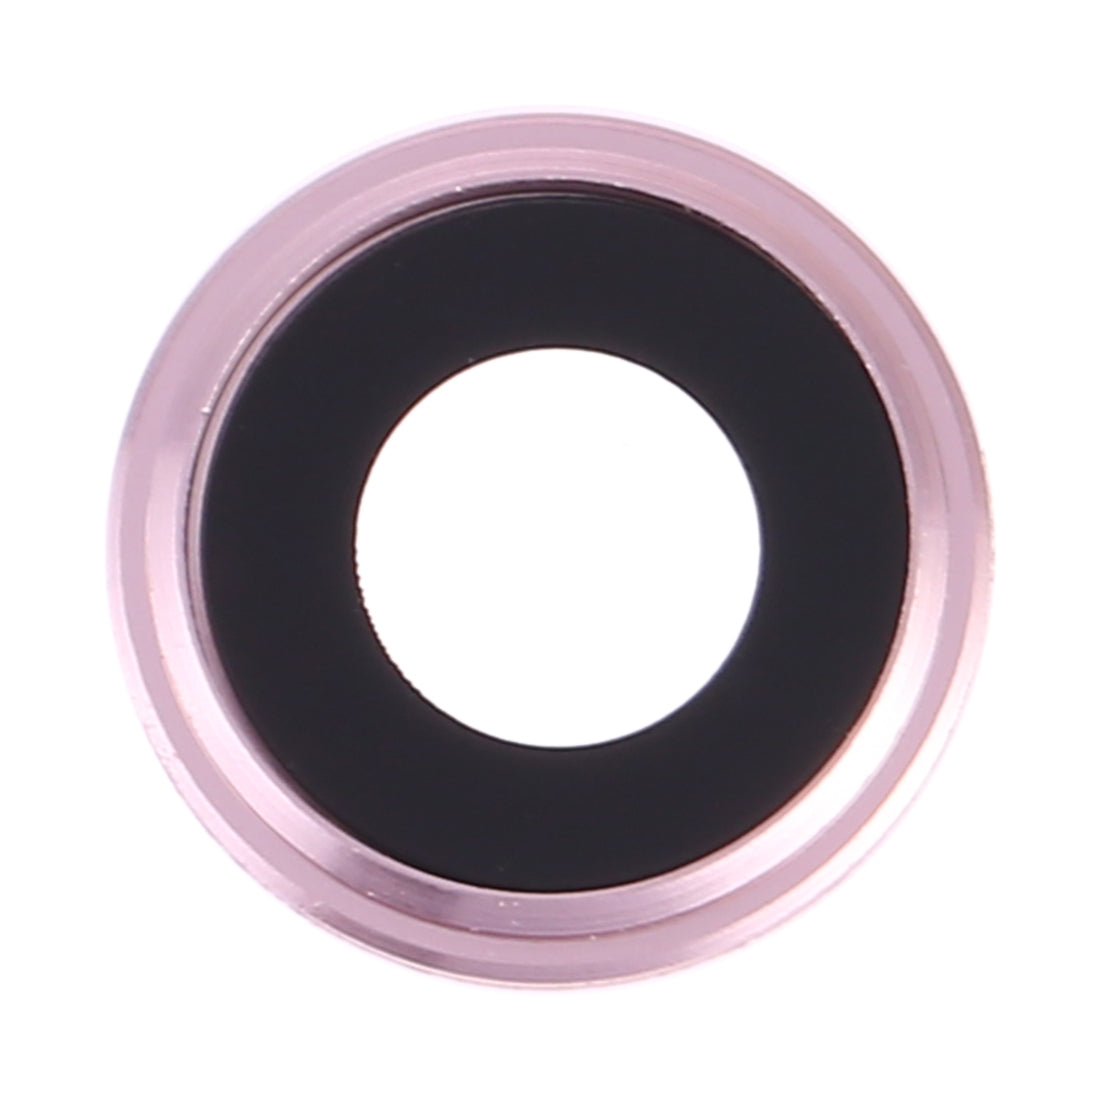 Rear Camera Lens Cover Vivo X9 Plus Pink